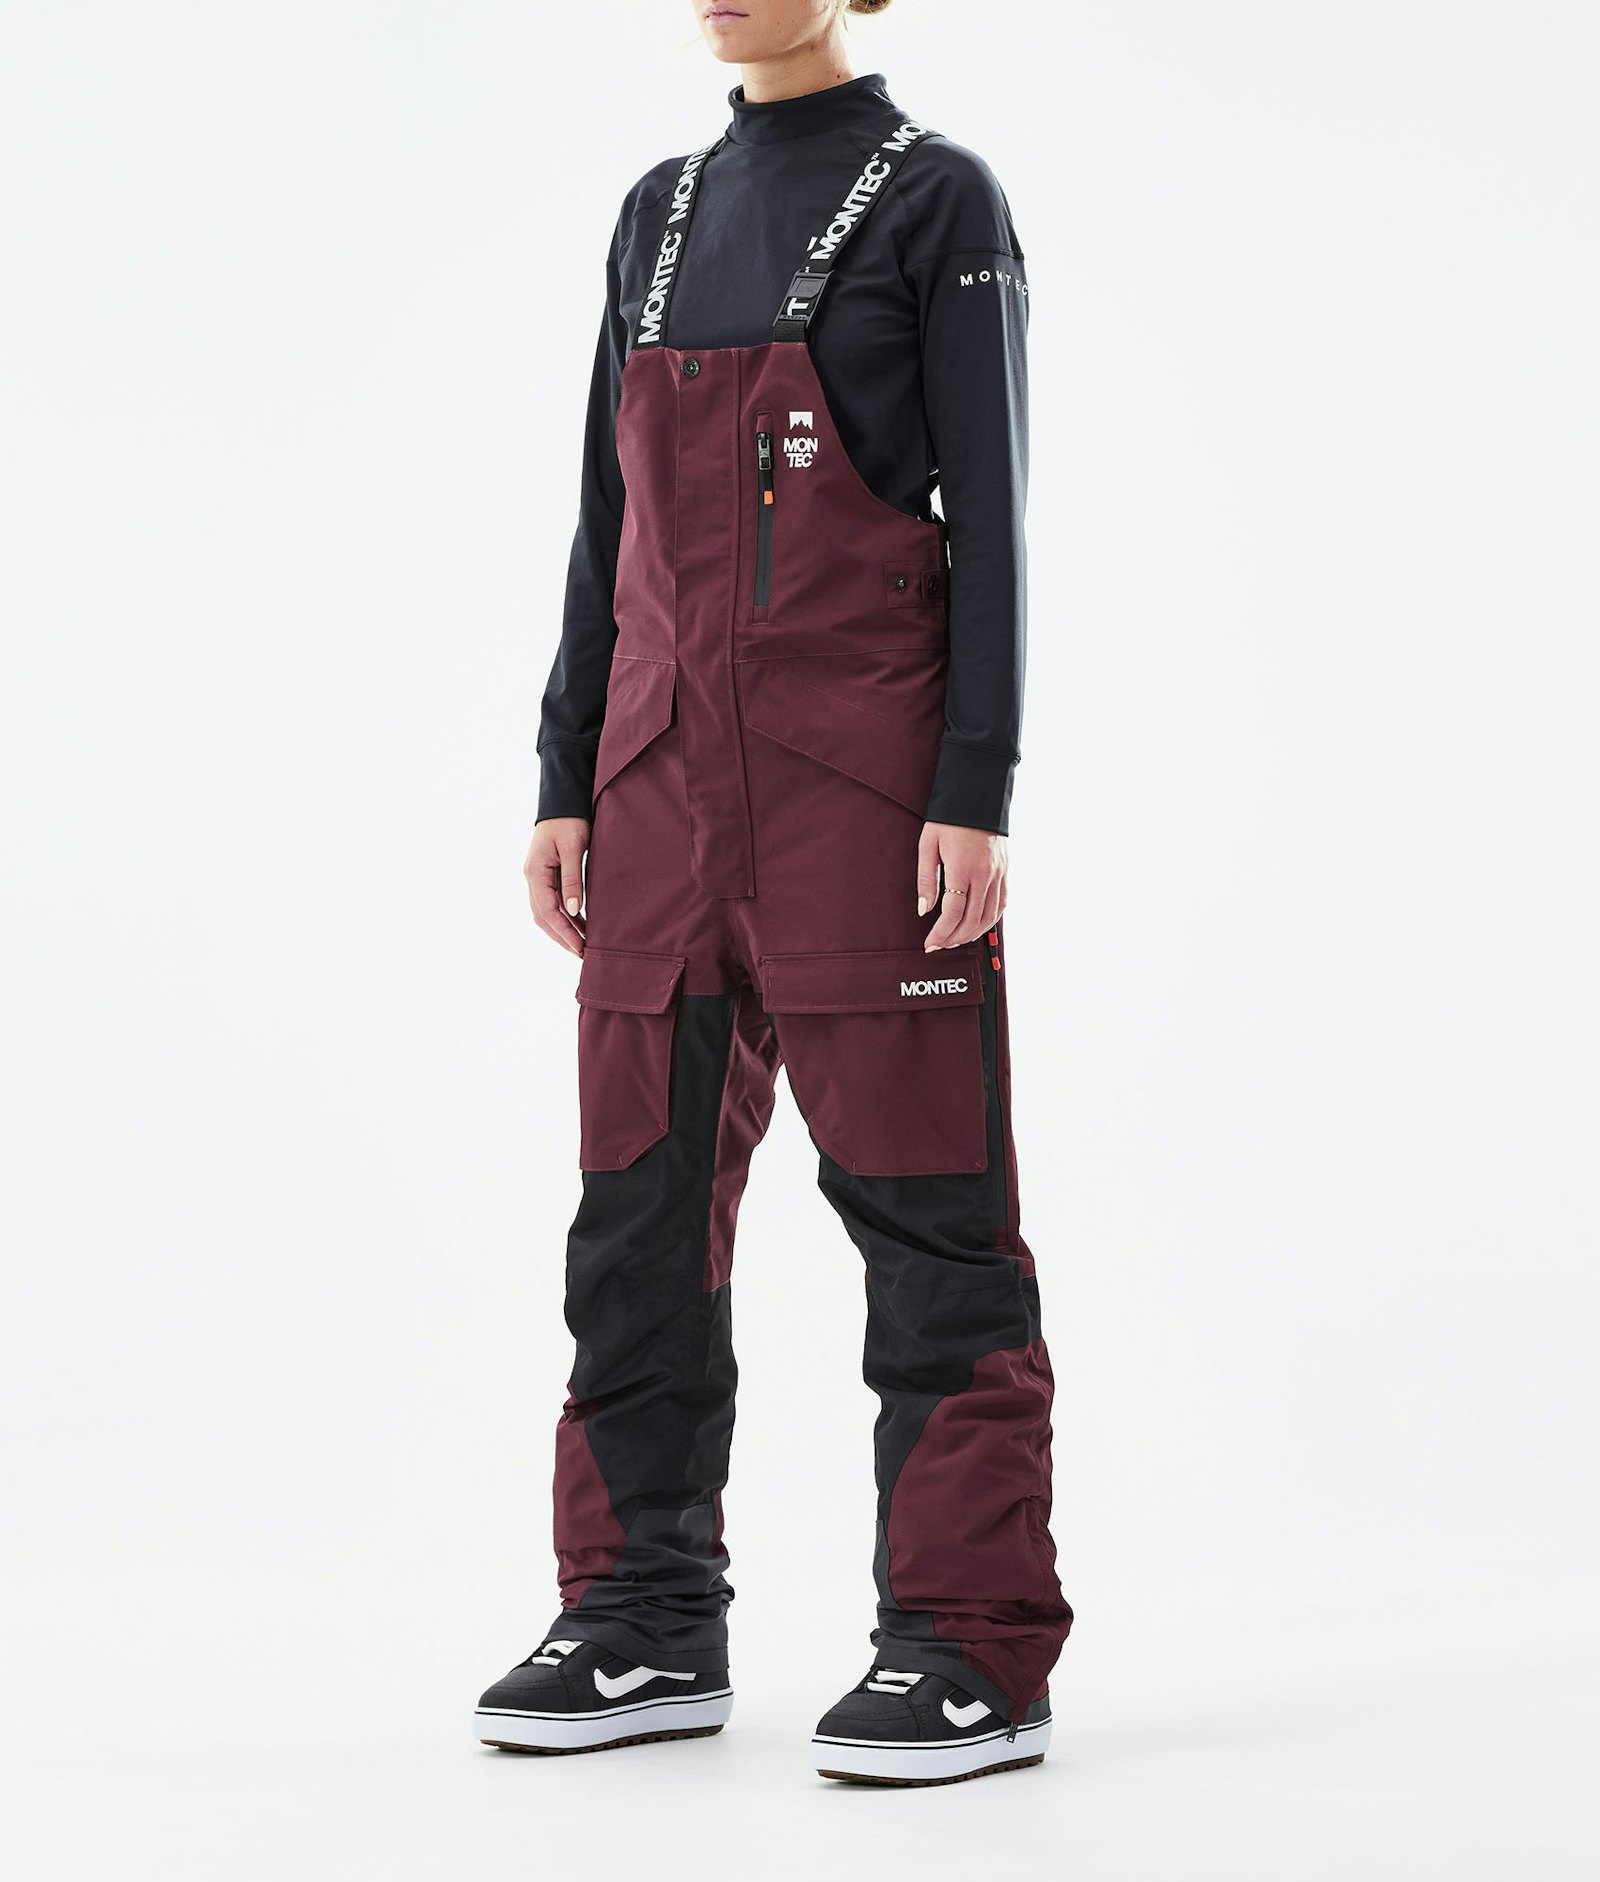 Fawk W 2021 Pantalon de Snowboard Femme Burgundy/Black